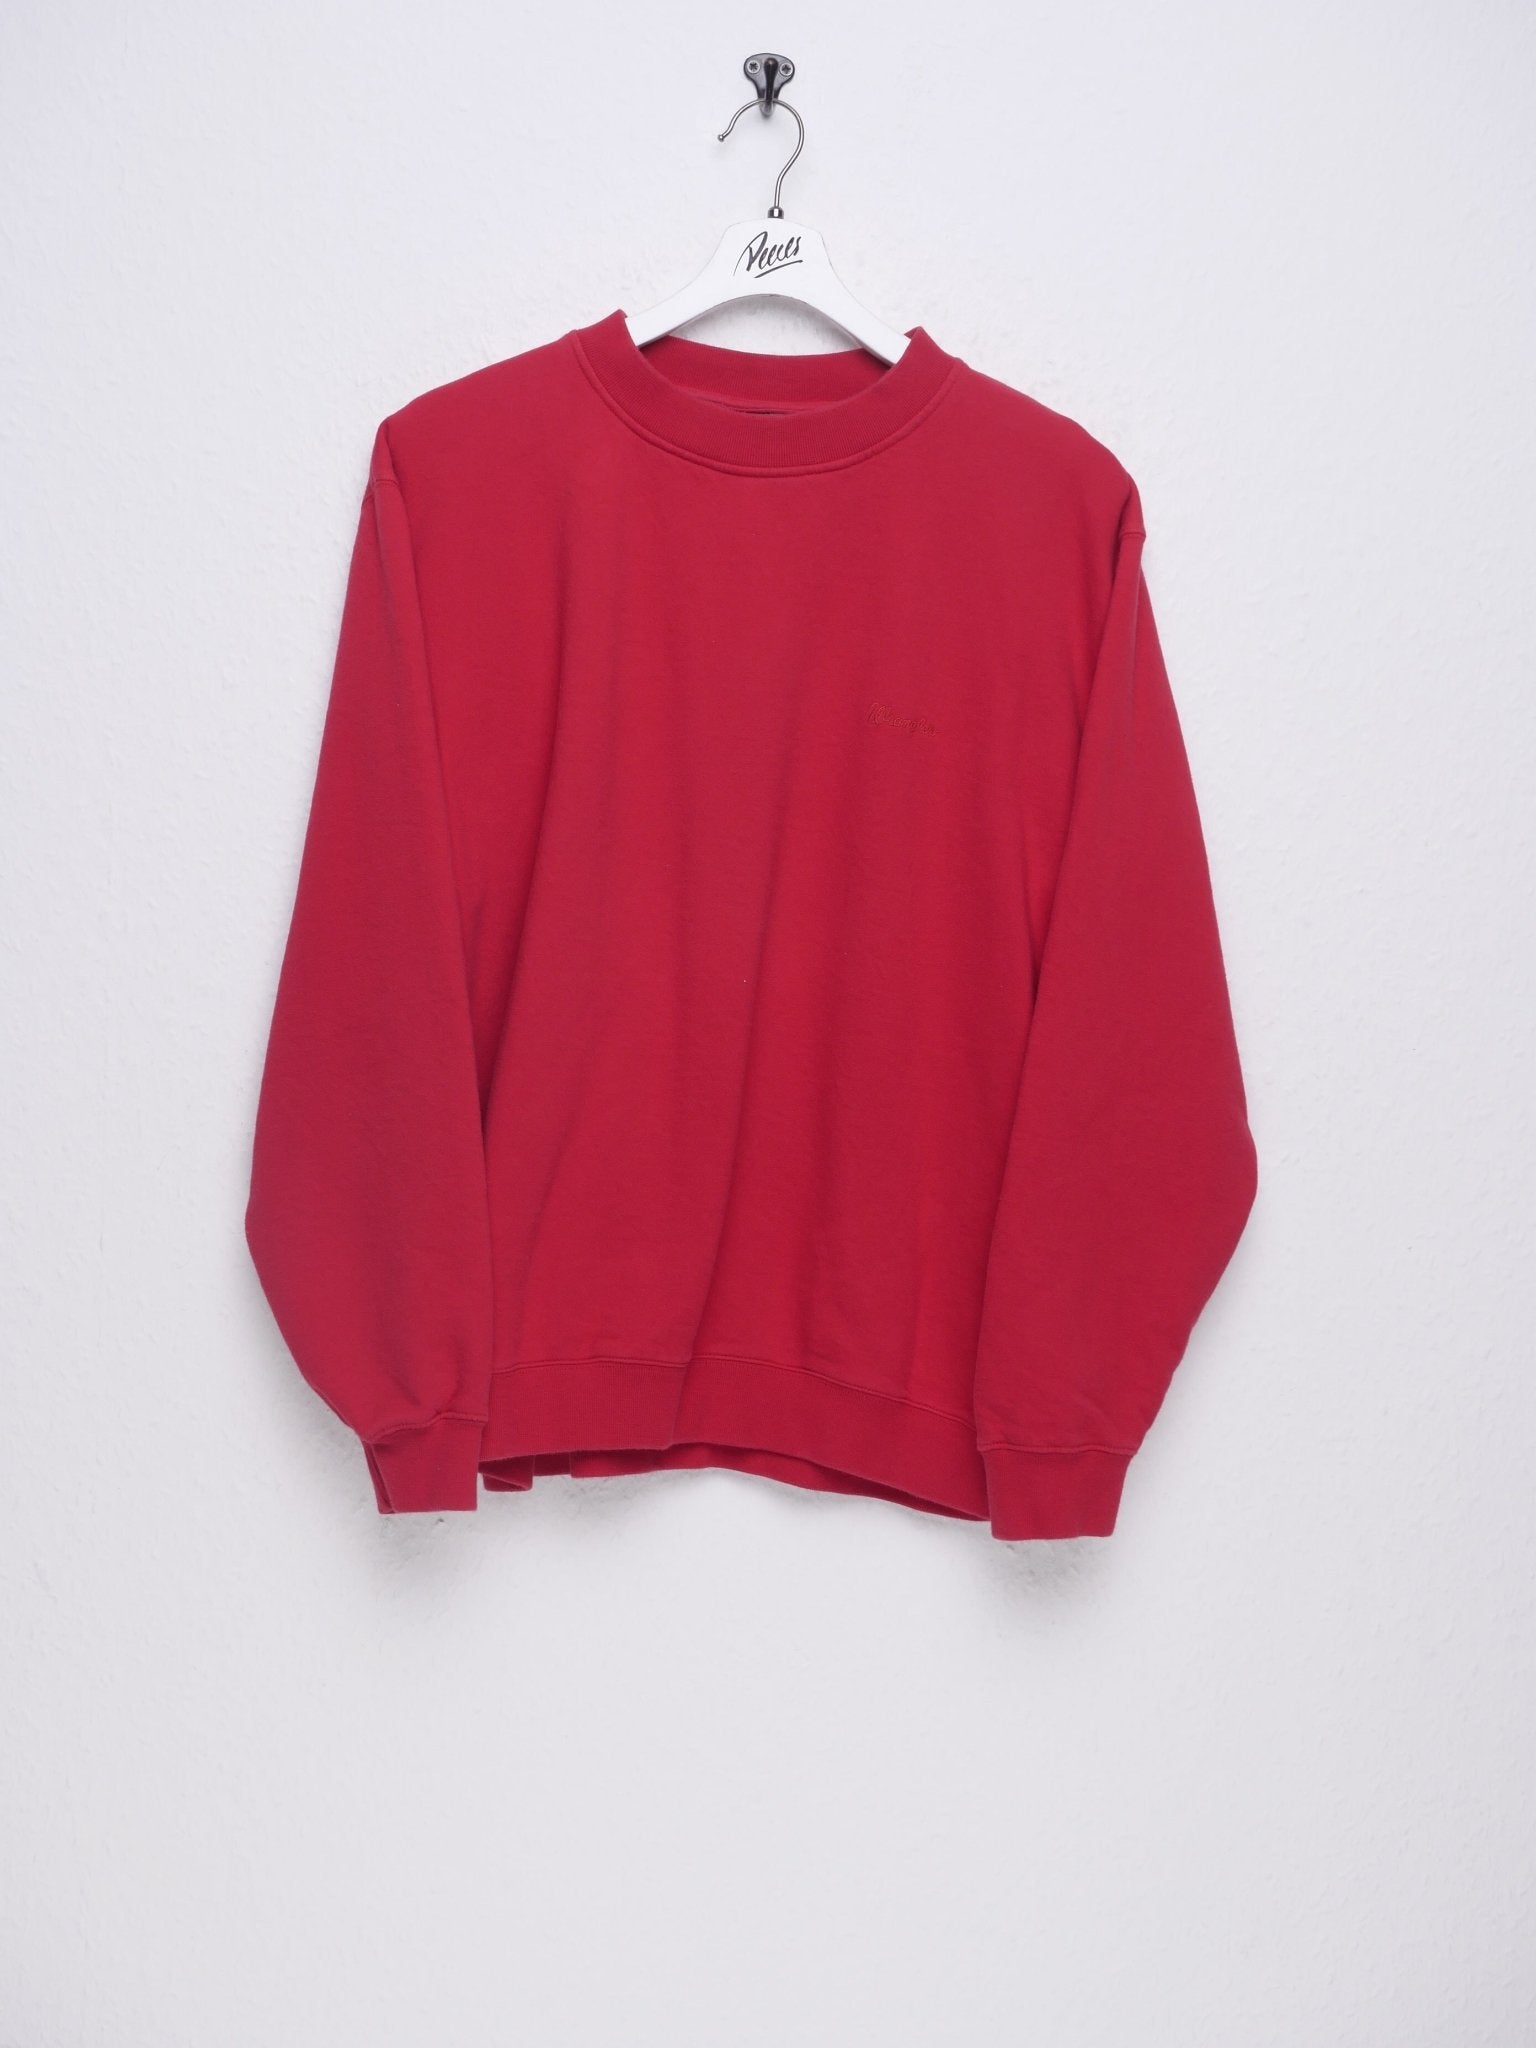 Wrangler basic red oversized Sweater - Peeces